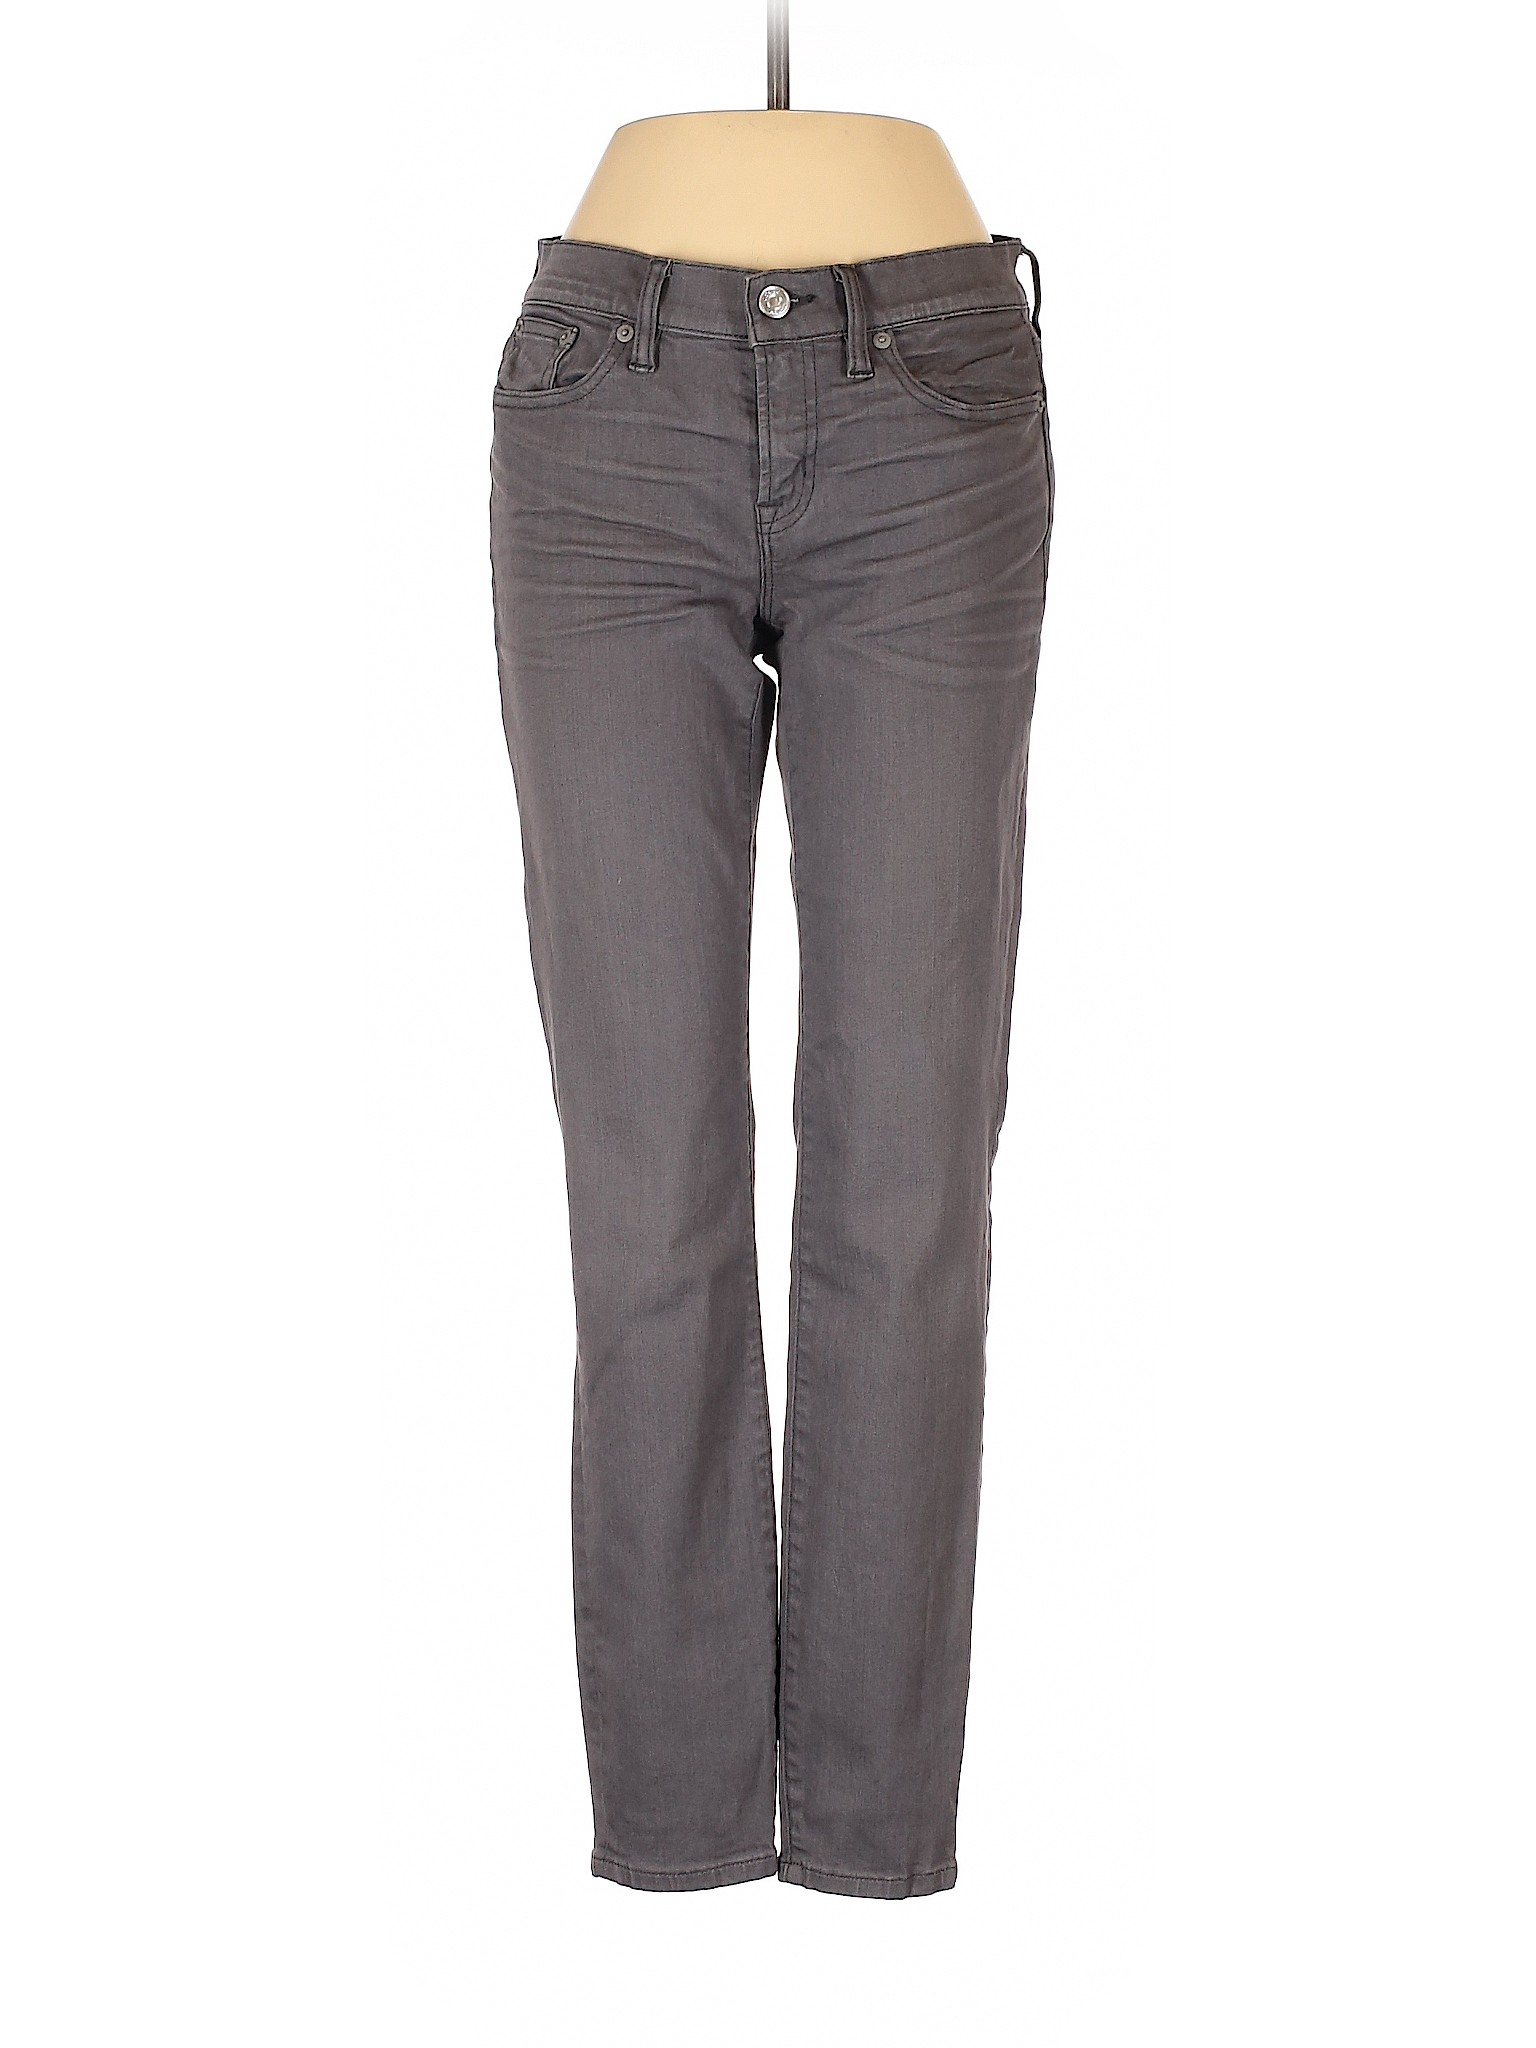 J.Crew Women Gray Jeans 26W | eBay